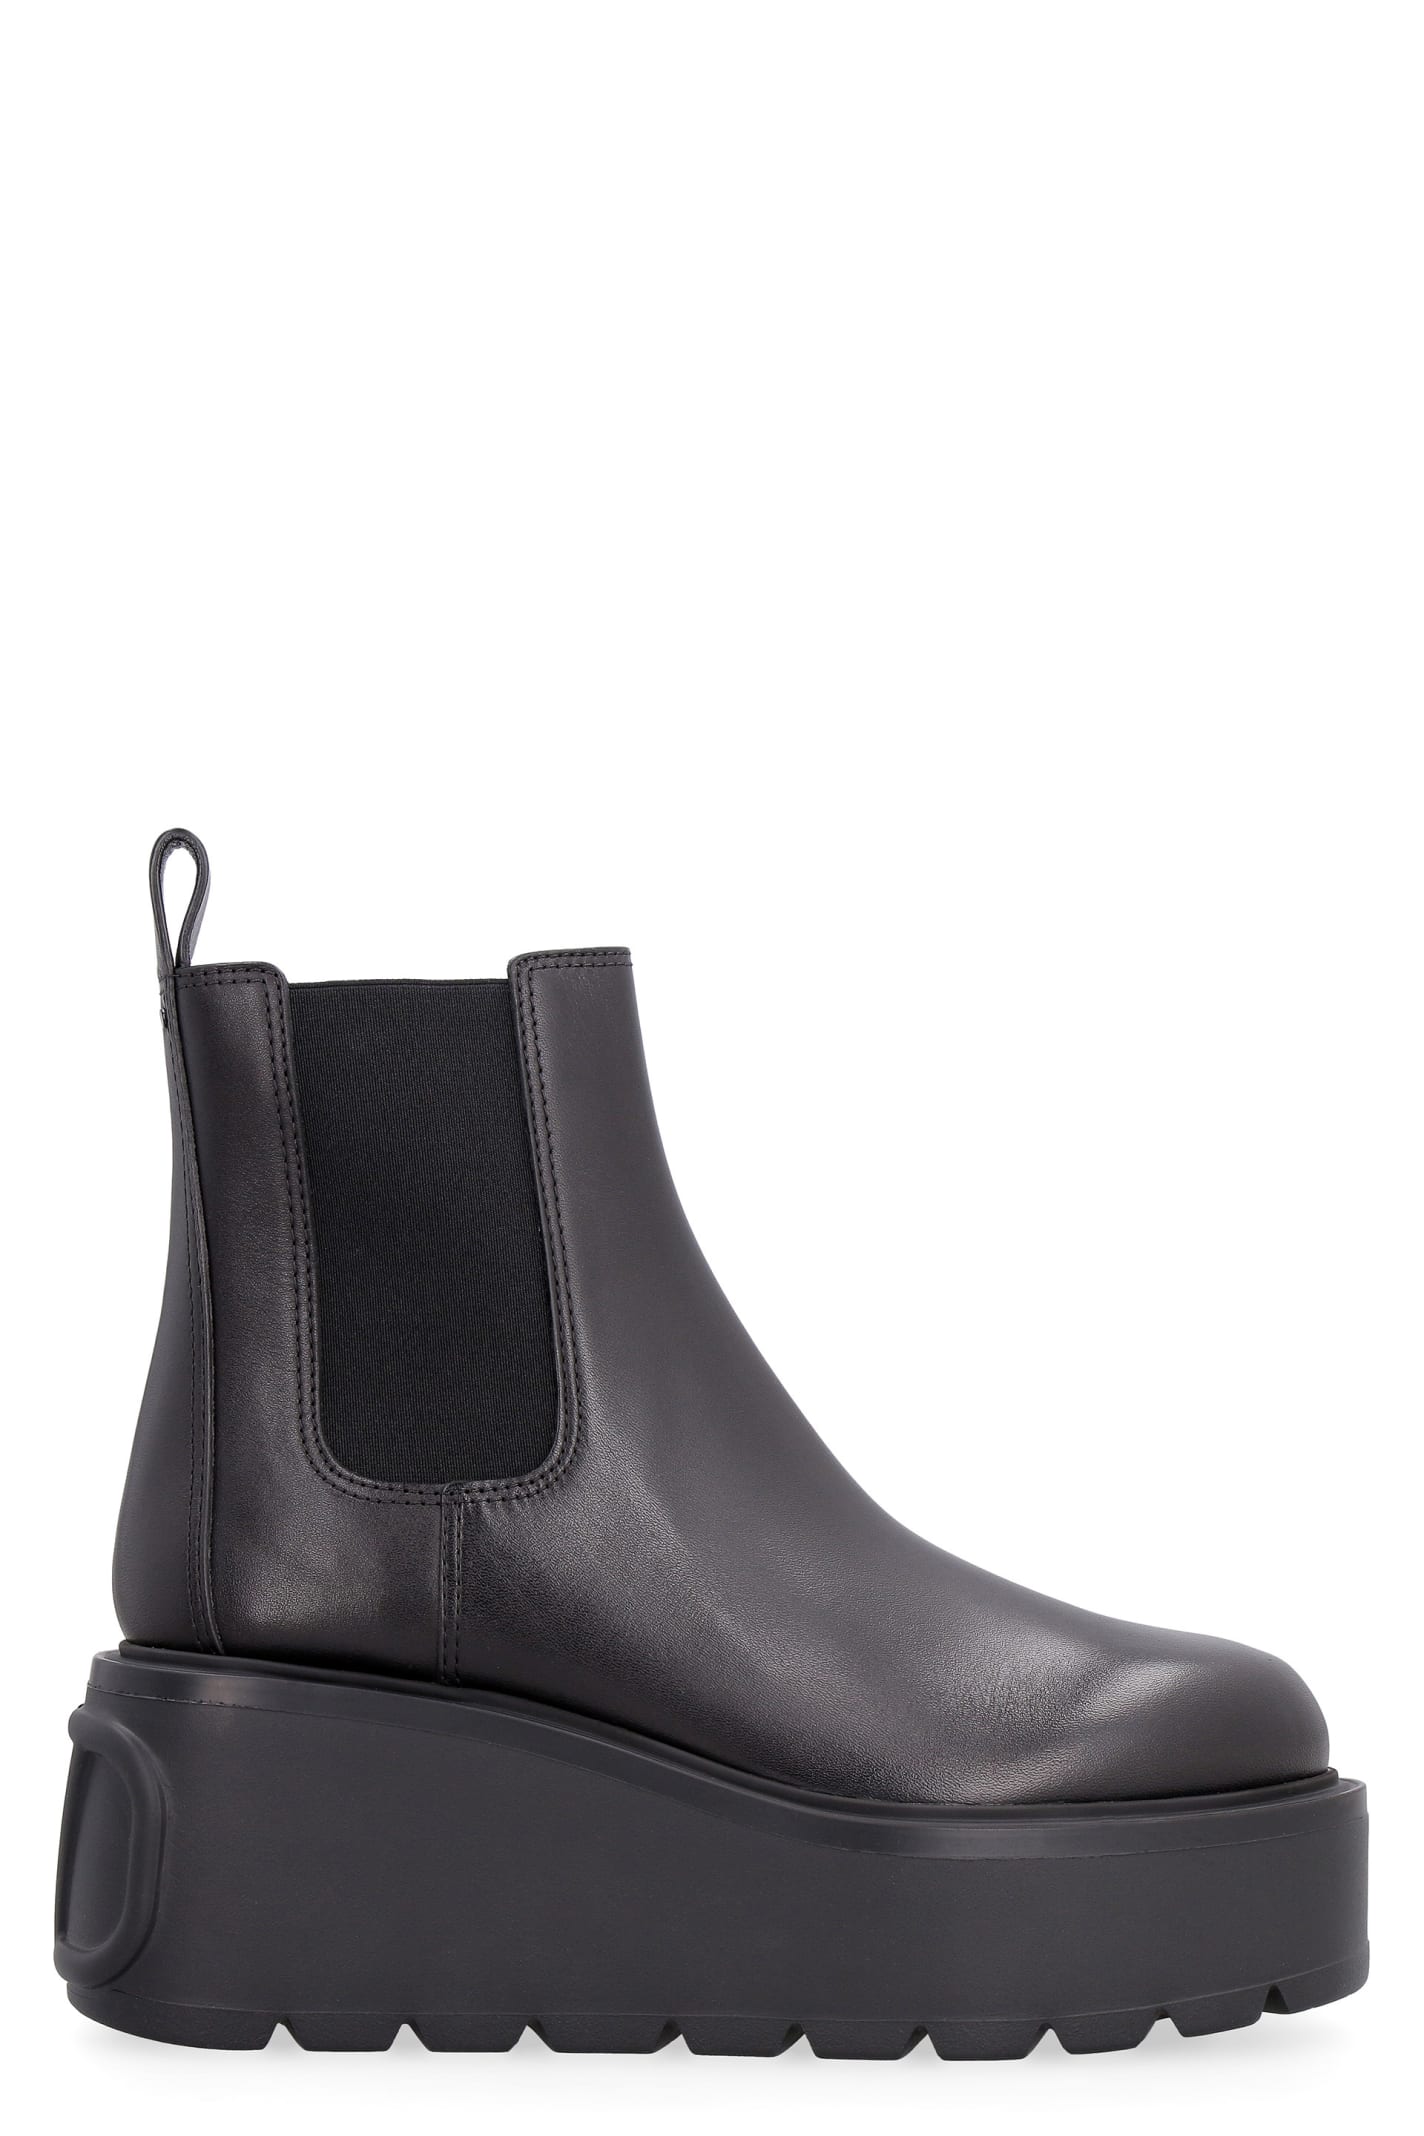 Valentino Garavani - Uniqueform Leather Platform Ankle Boots